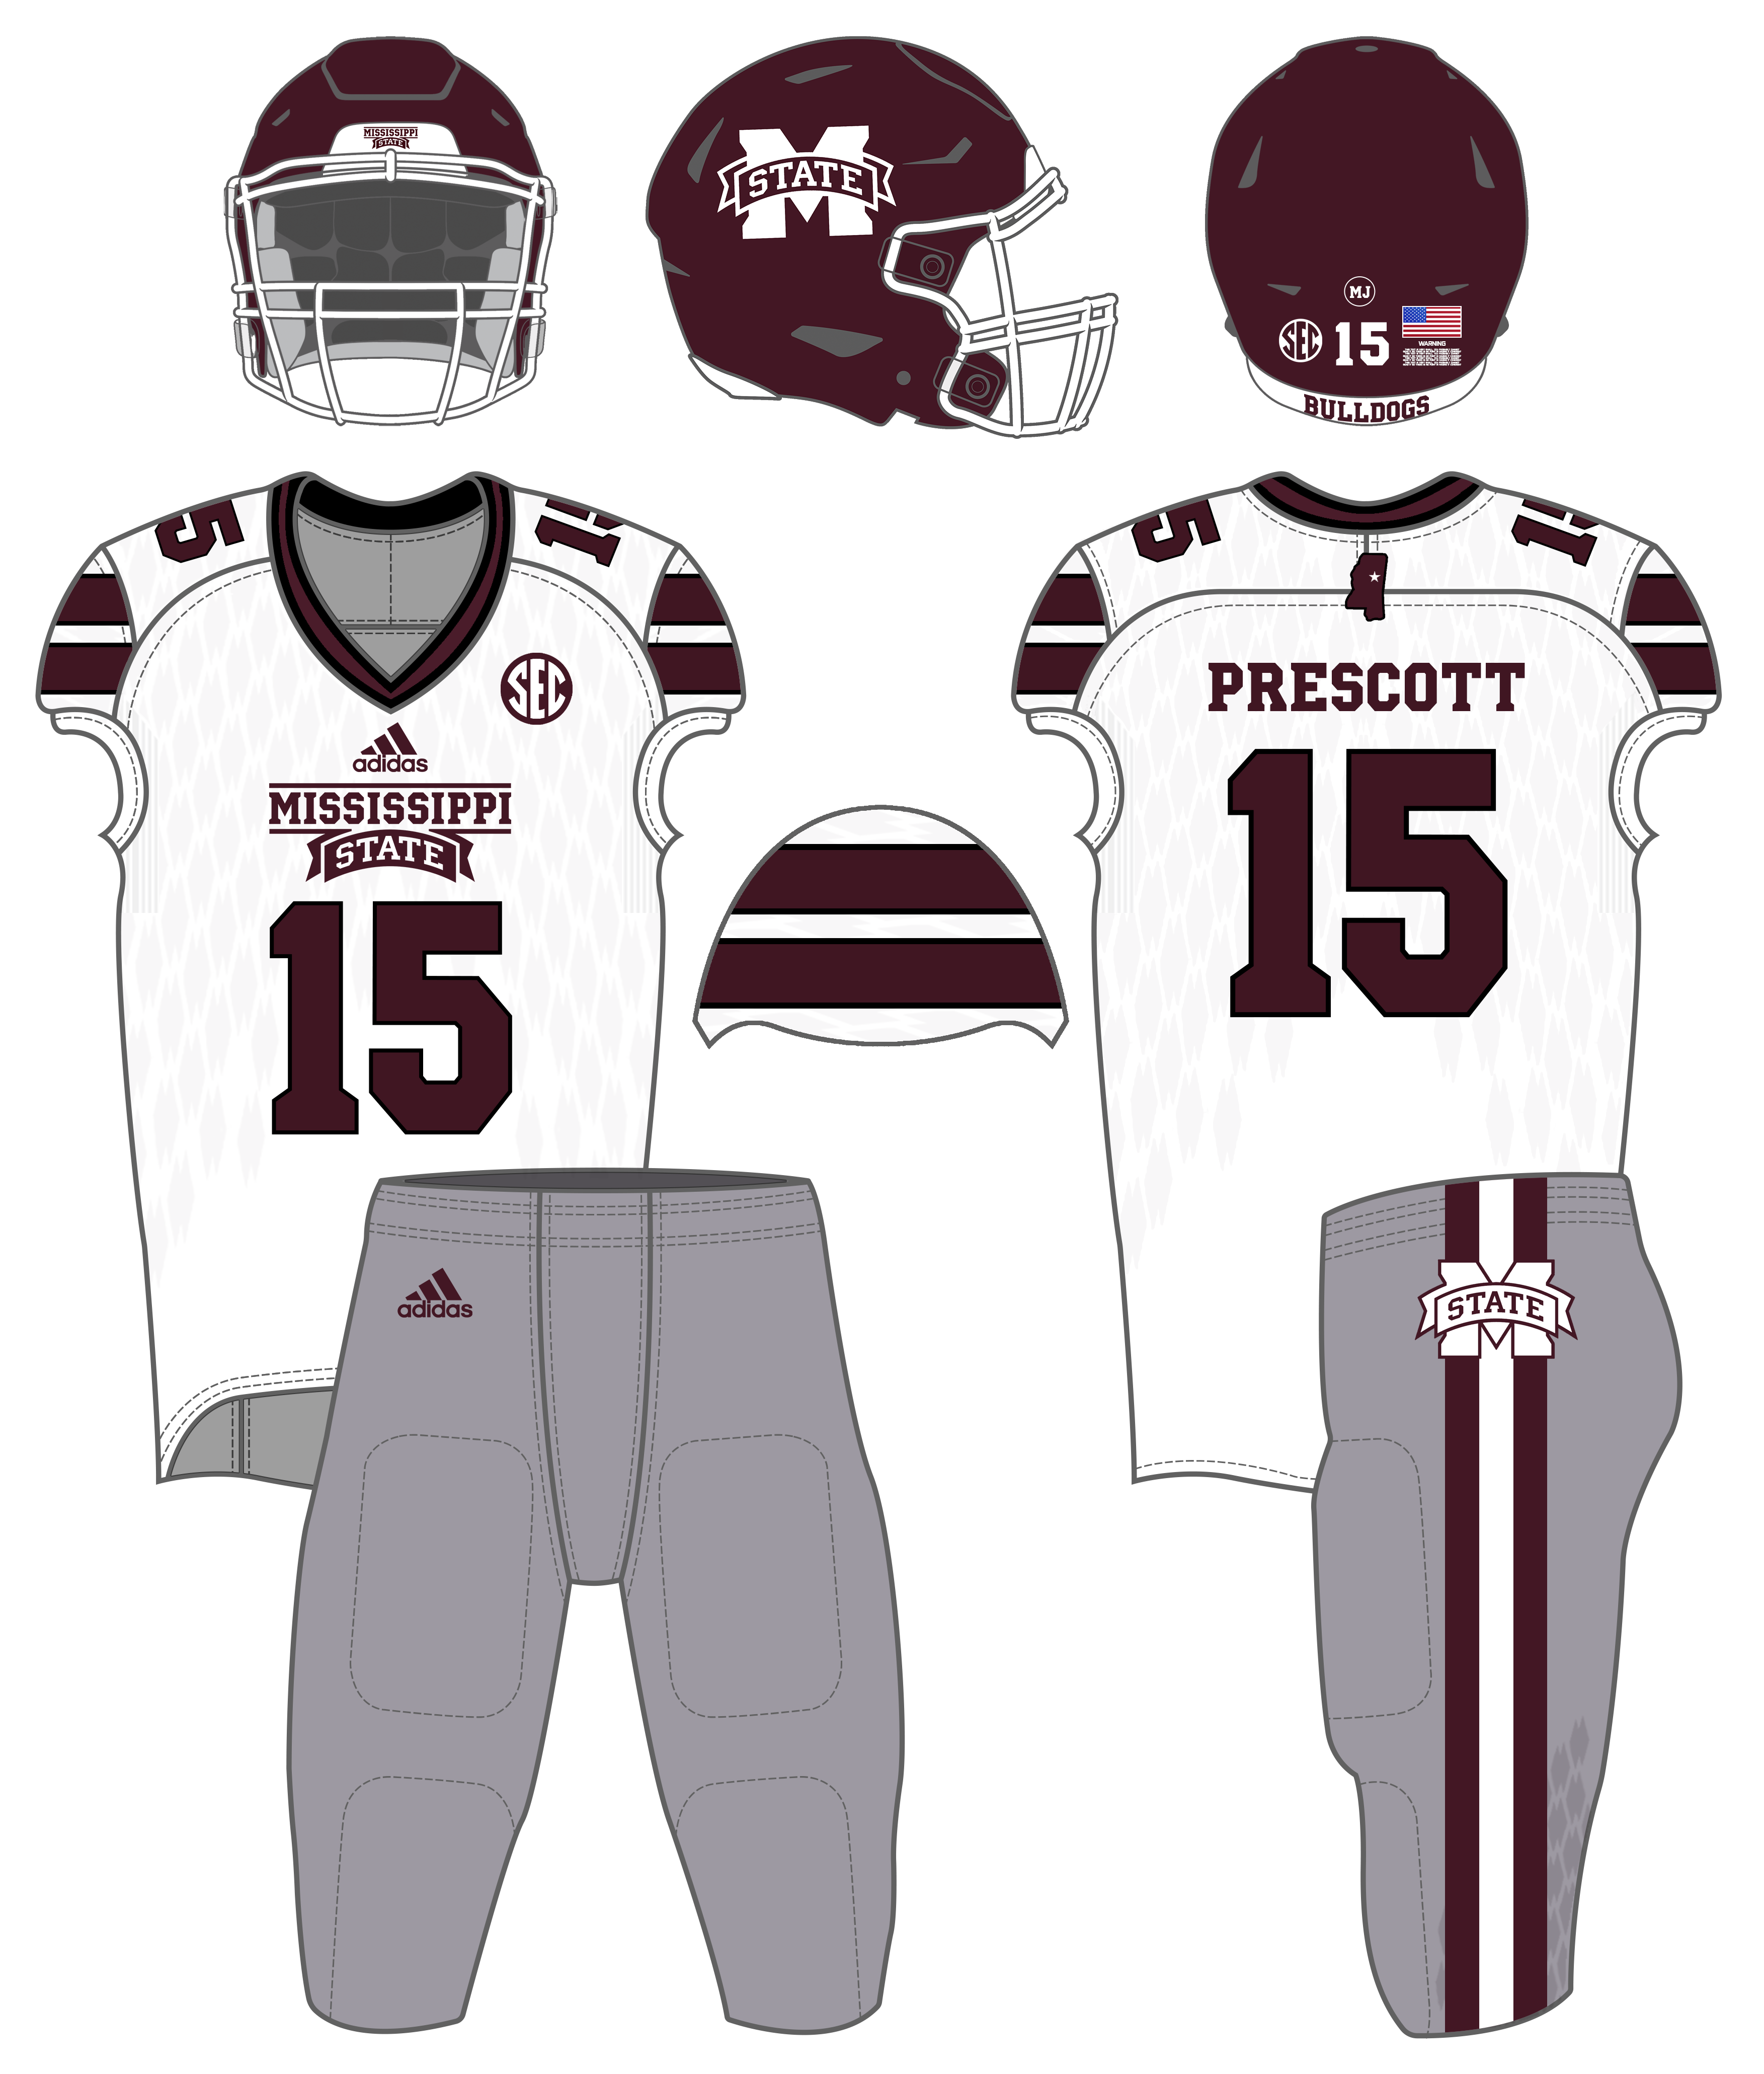 Houston Texans 2015 Uniforms Concept on Behance